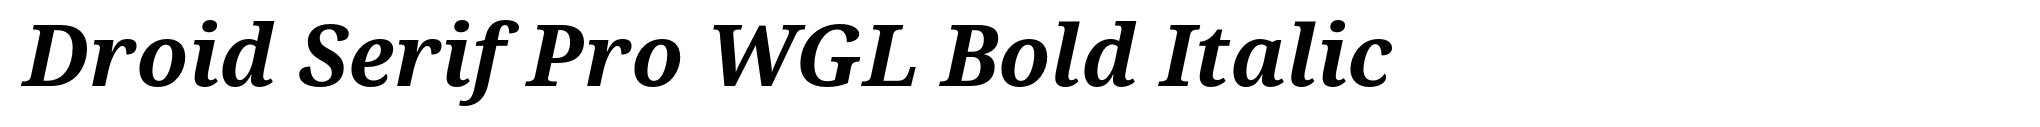 Droid Serif Pro WGL Bold Italic image